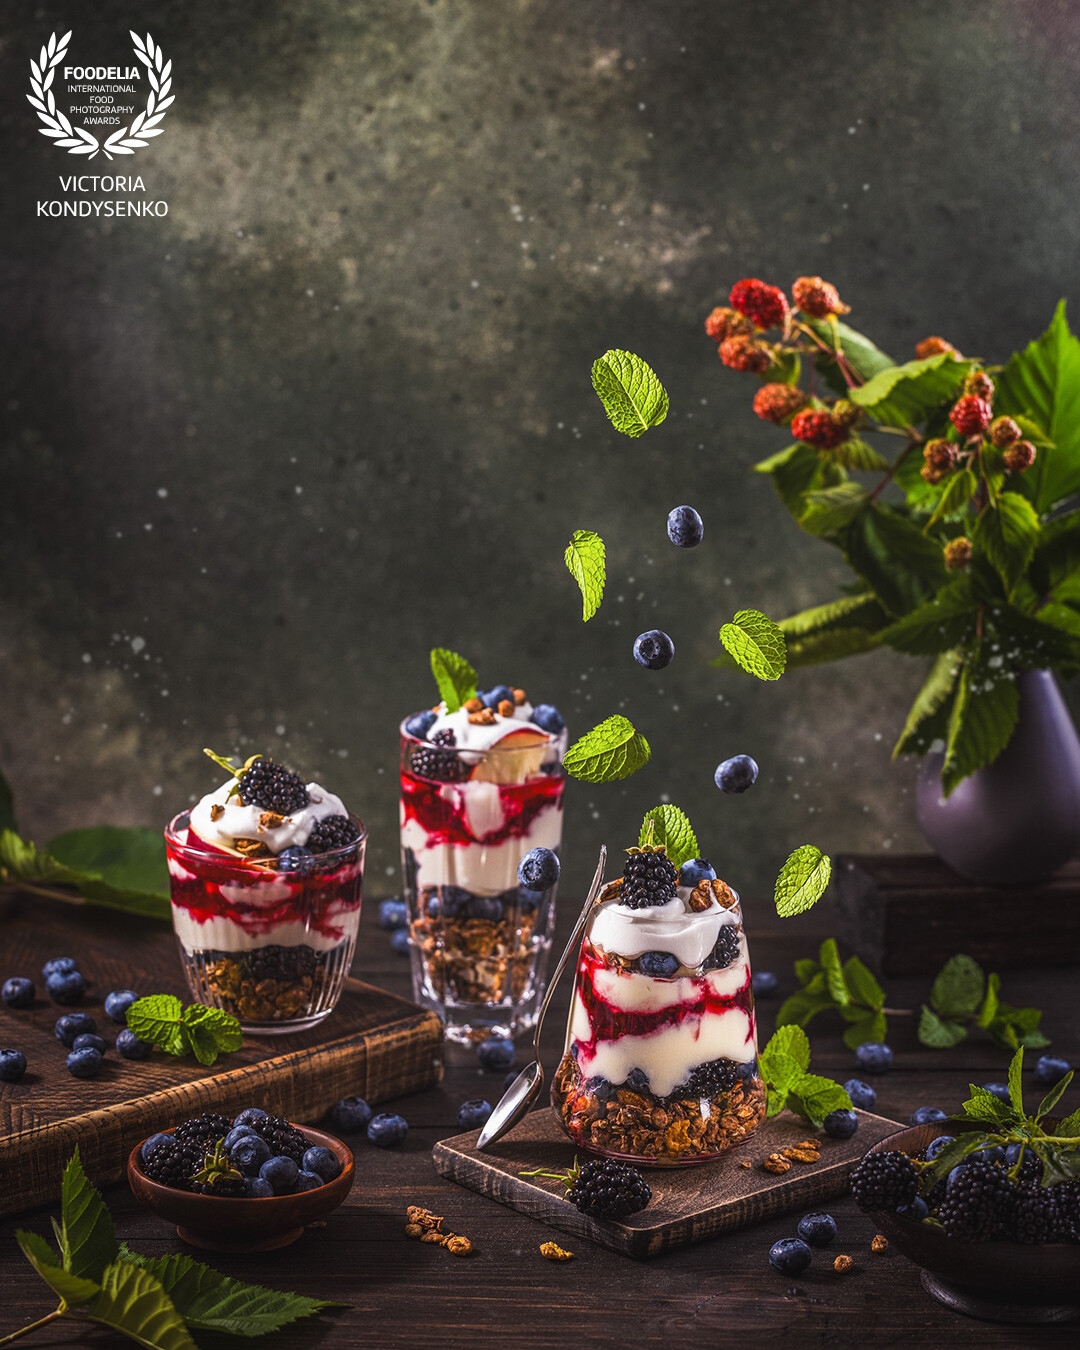 Homemade granola with greek yogurt, berries jam and fresh blackberries and blueberries in glasses. Advertising photo shoot of the local Ukrainian family cafe